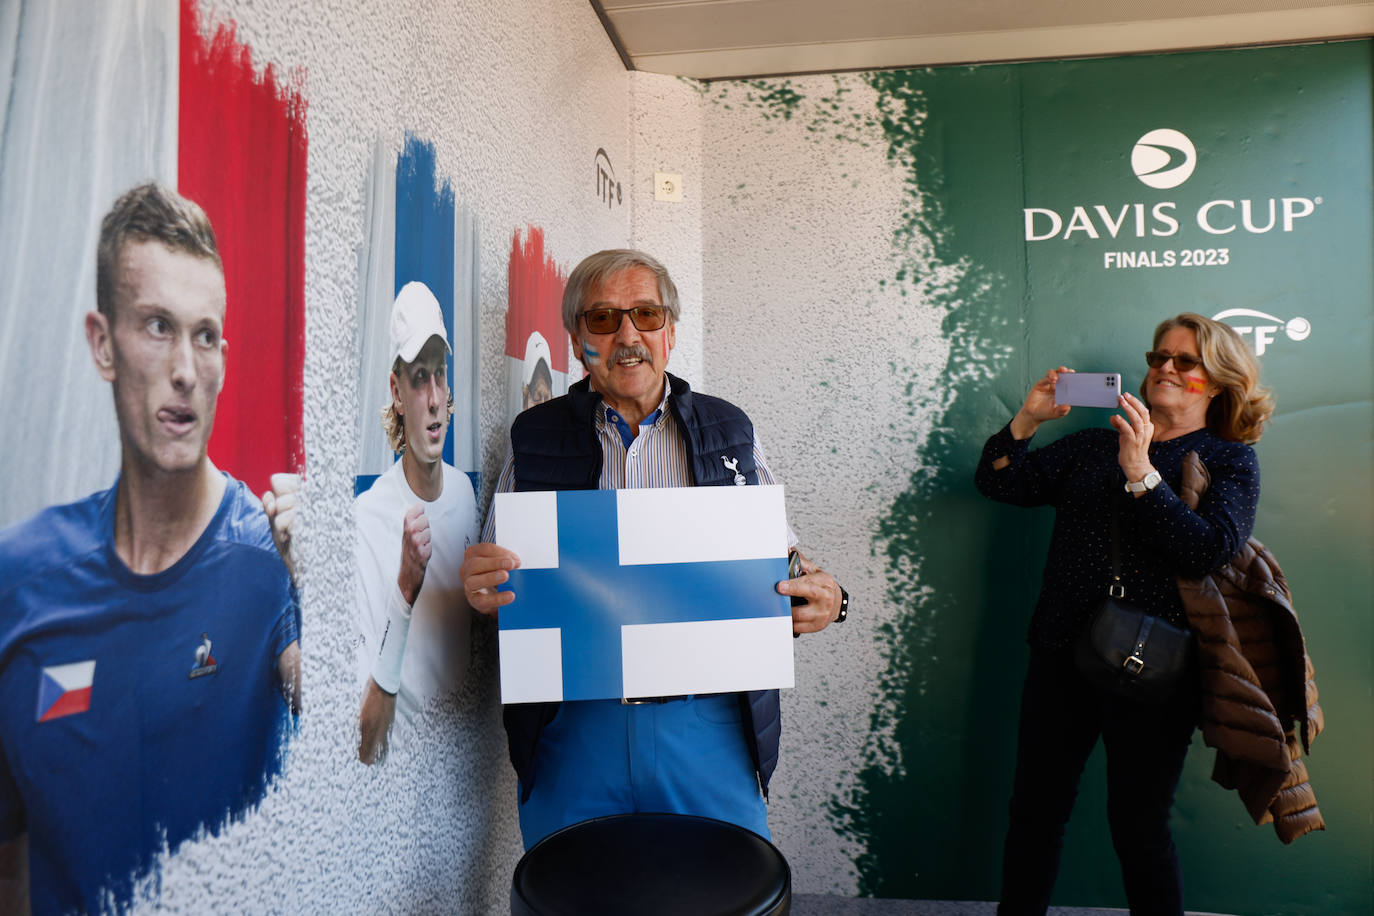 The Davis Cup in Malaga